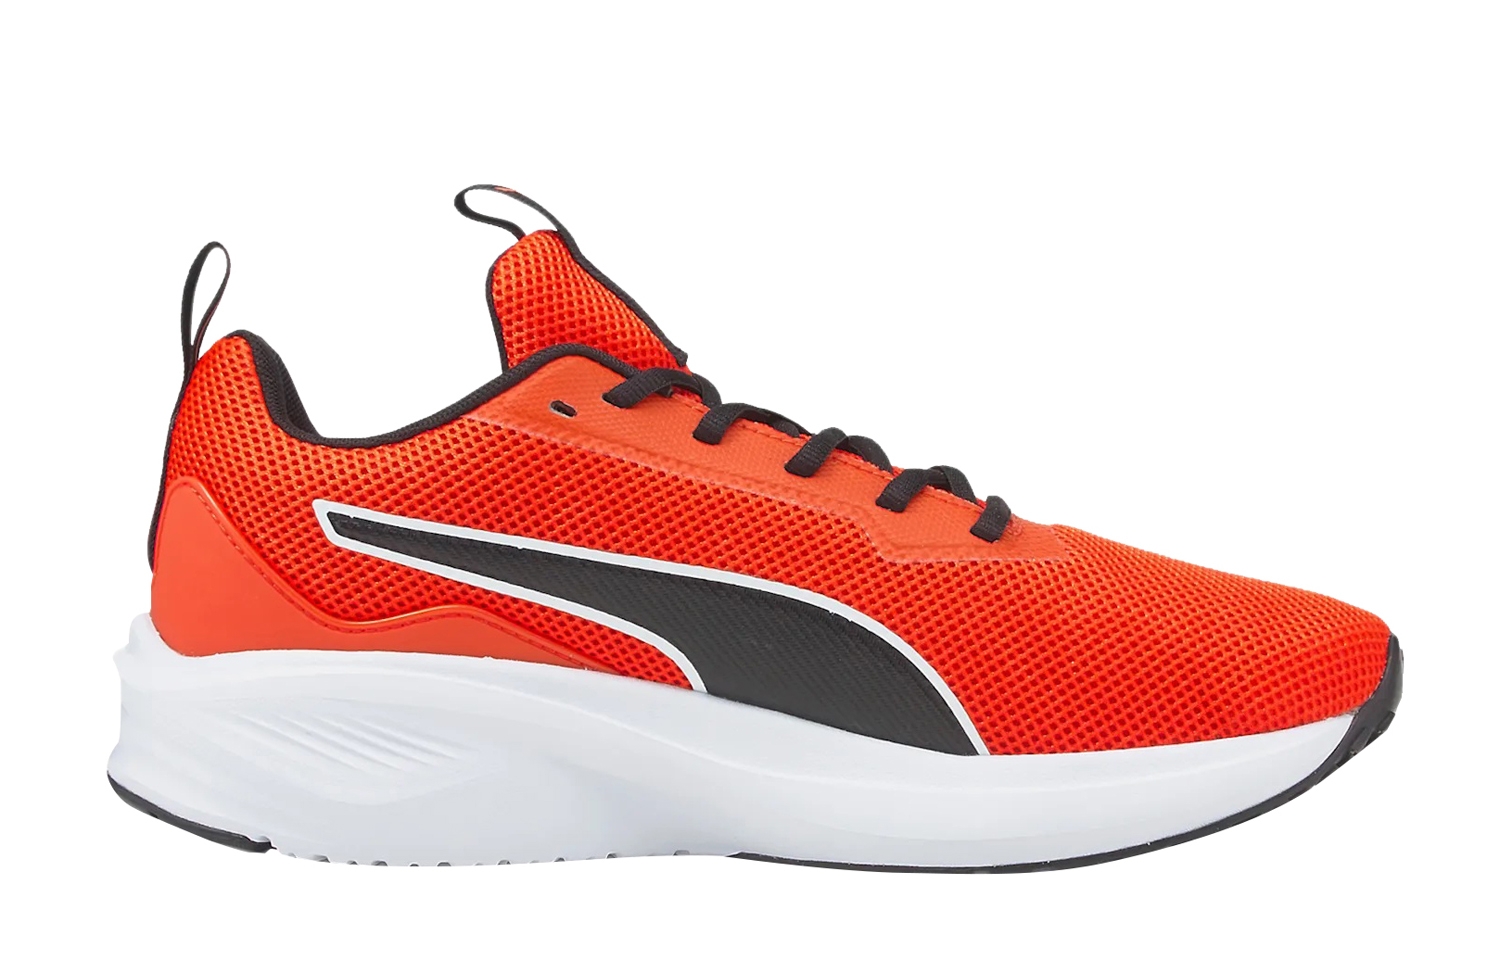 Puma | Puma Fire Runner Profoam Men's Running Shoes- Cherry Tomato-Blackwhite